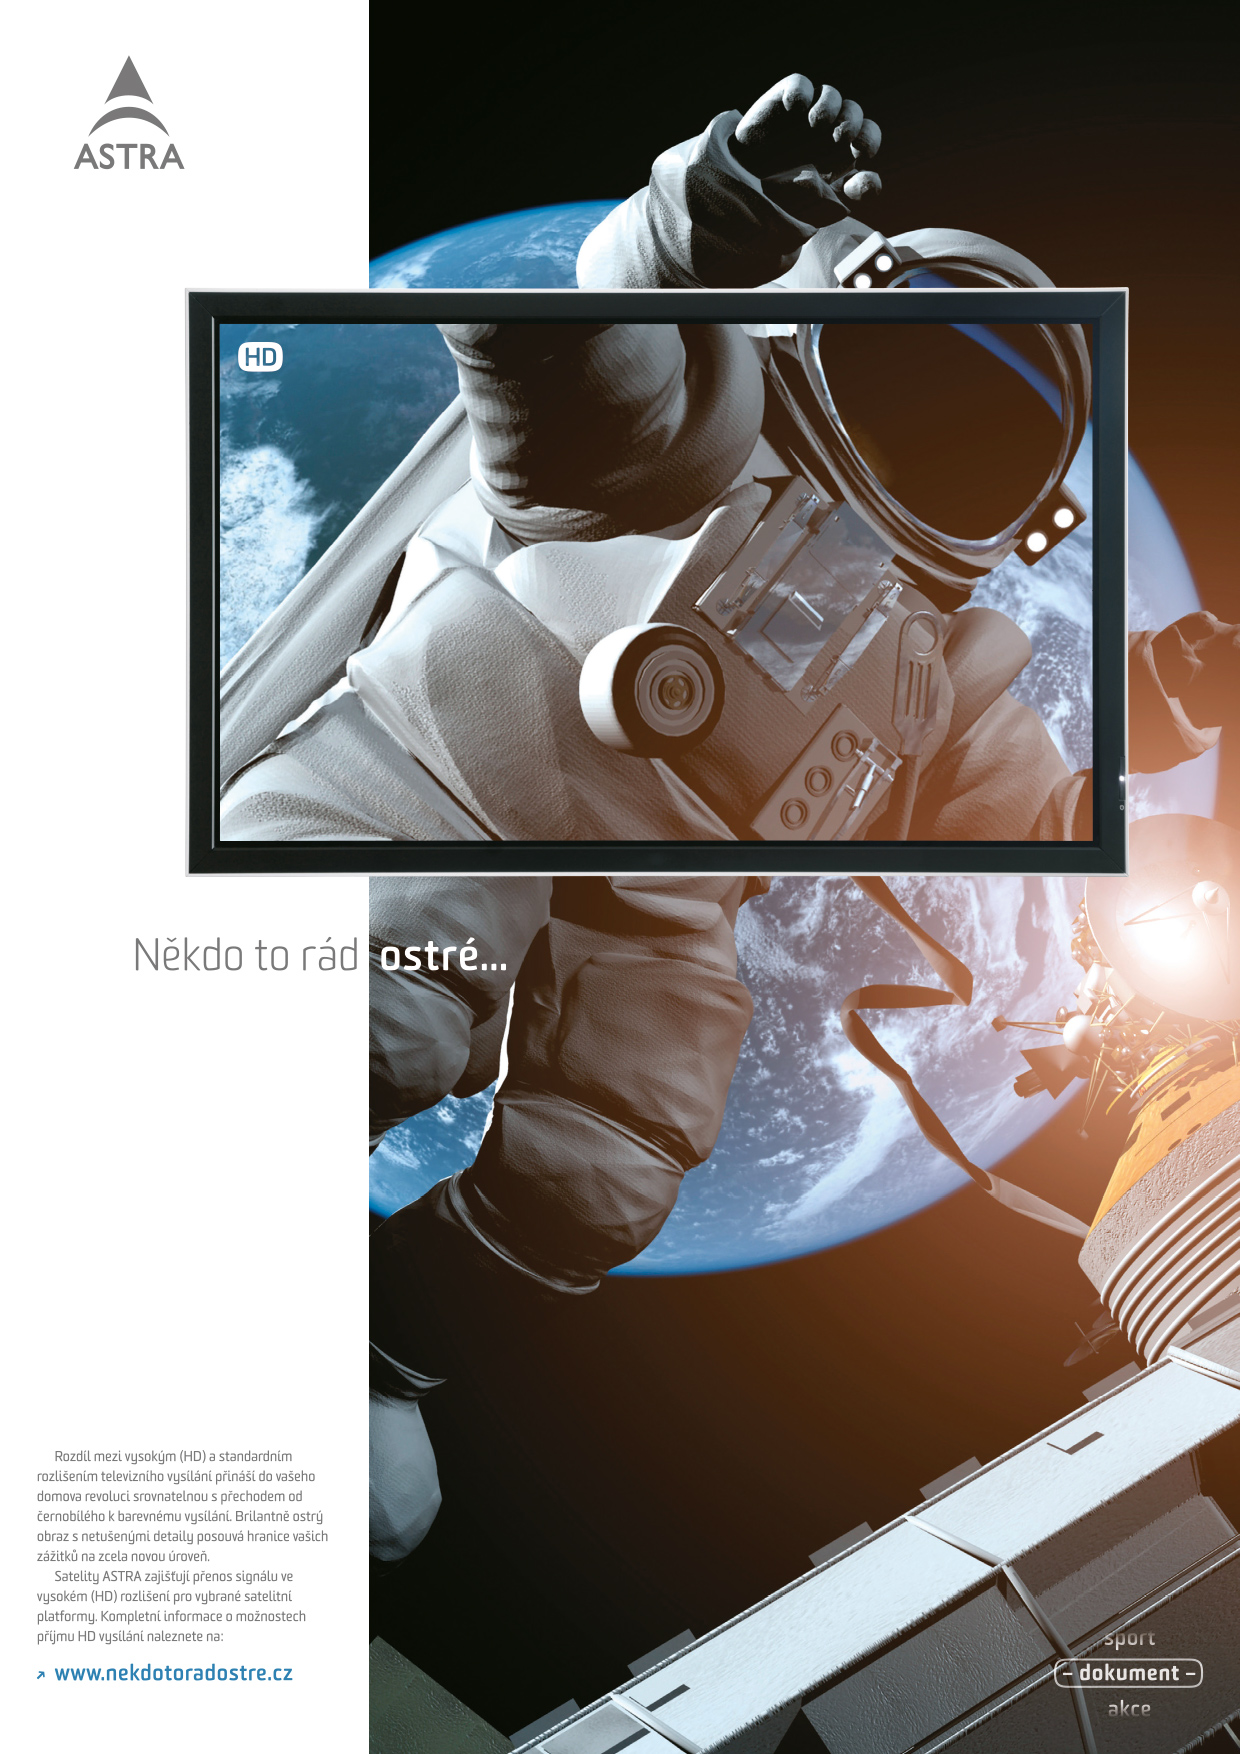 [album/Products_Model_Product/84/ASTRA_HD2013_kosmonaut_v2.jpg]